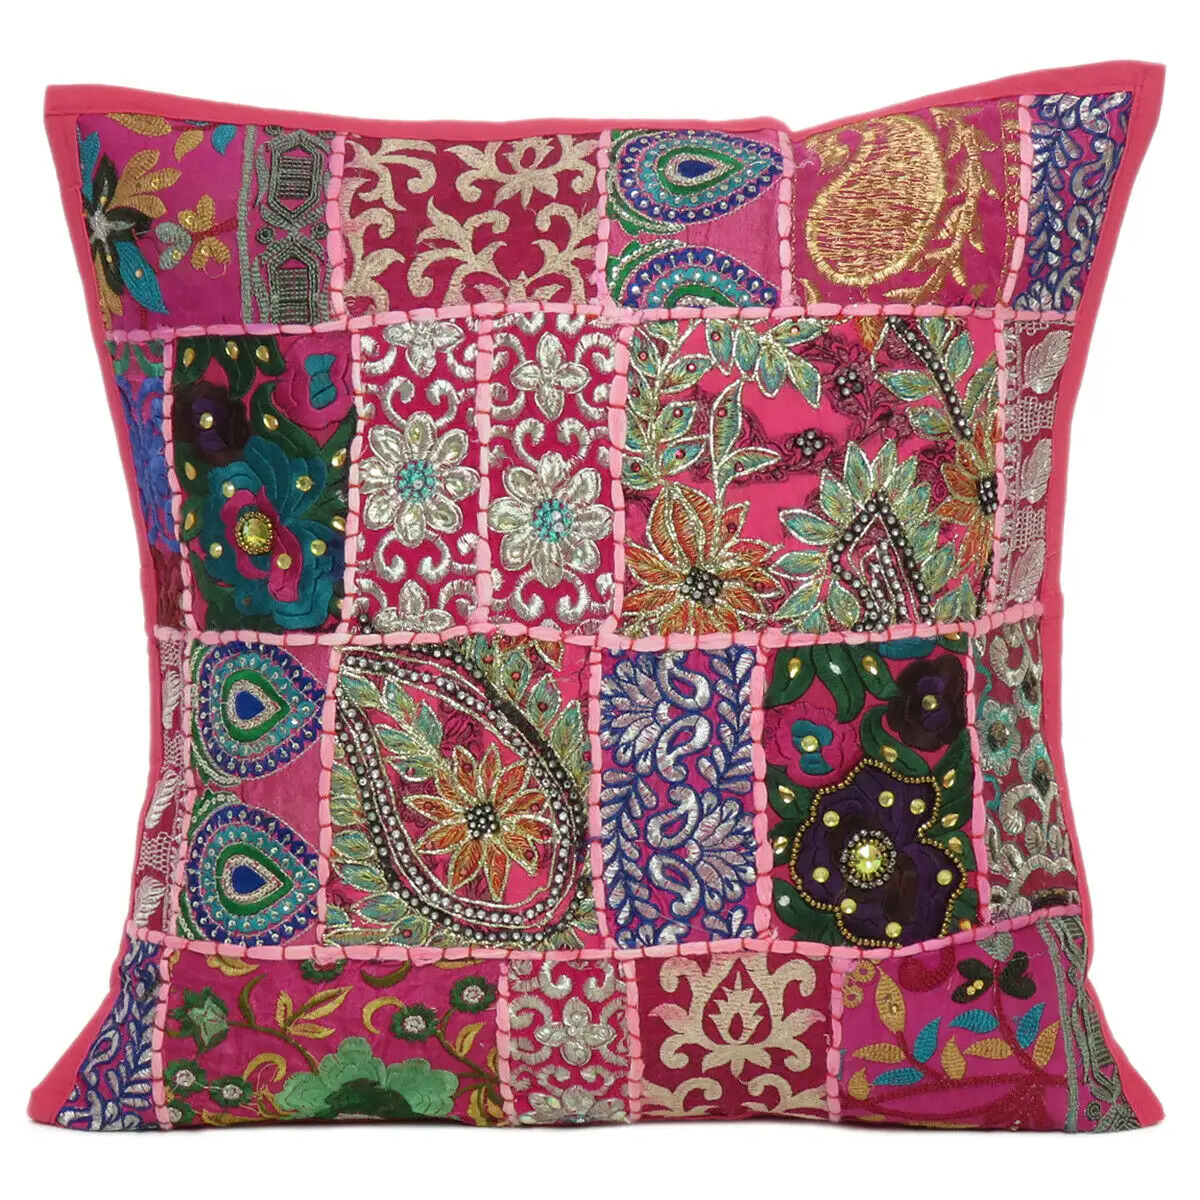 Fodera per cuscino decorativo Kantha ricamato a mano dal design indiano fodera per cuscino con stampa Rajasthani